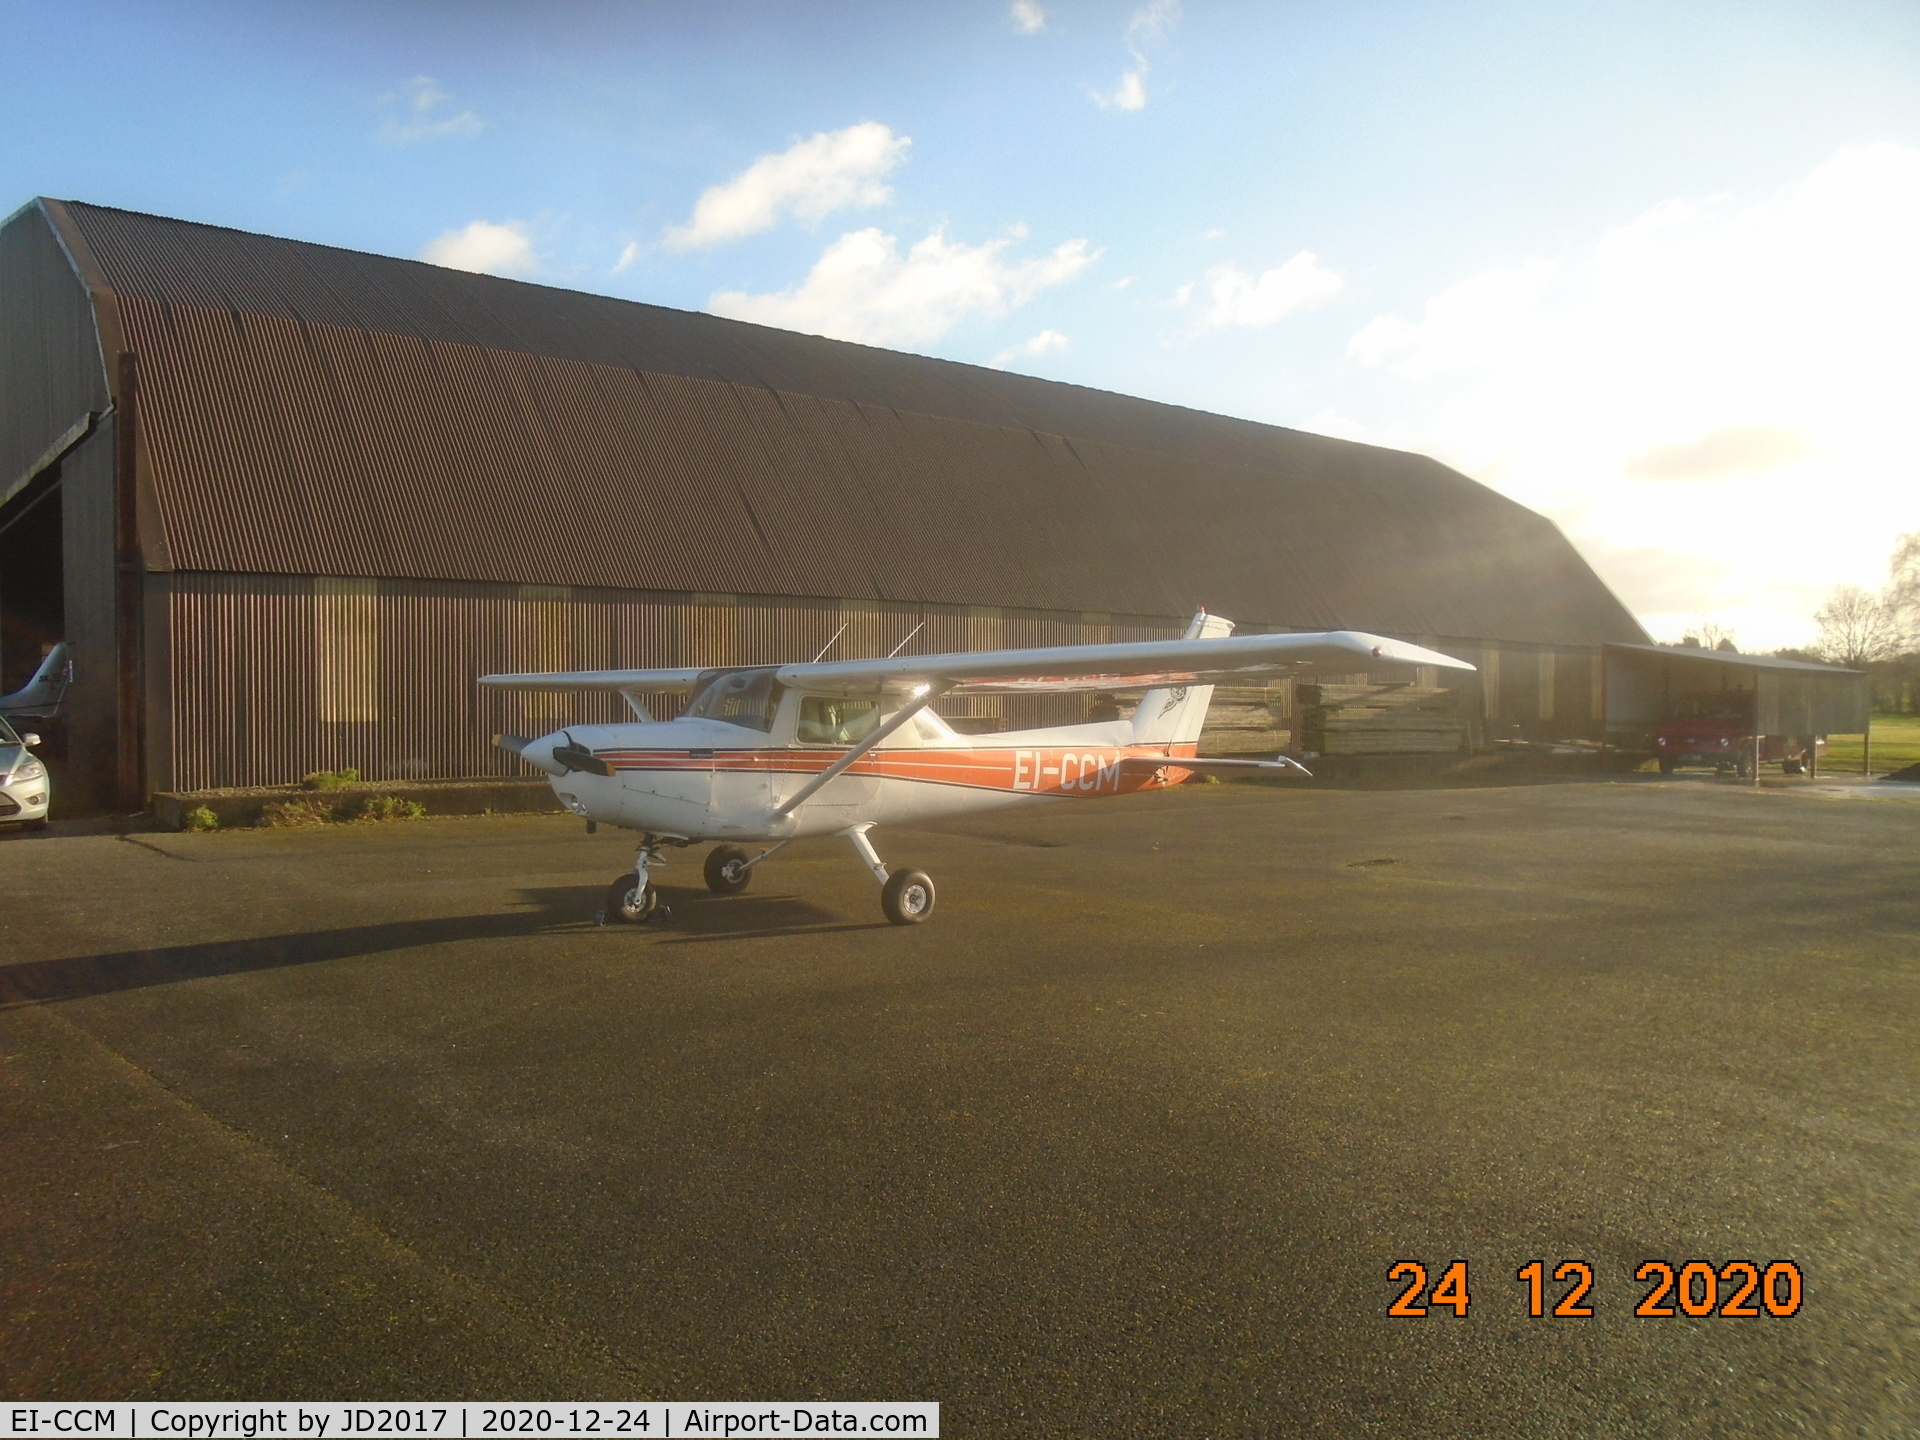 EI-CCM, 1979 Cessna 152 C/N 152-82320, Kilrush Airfield  - best aerodrome in Ireland! 
December 2020